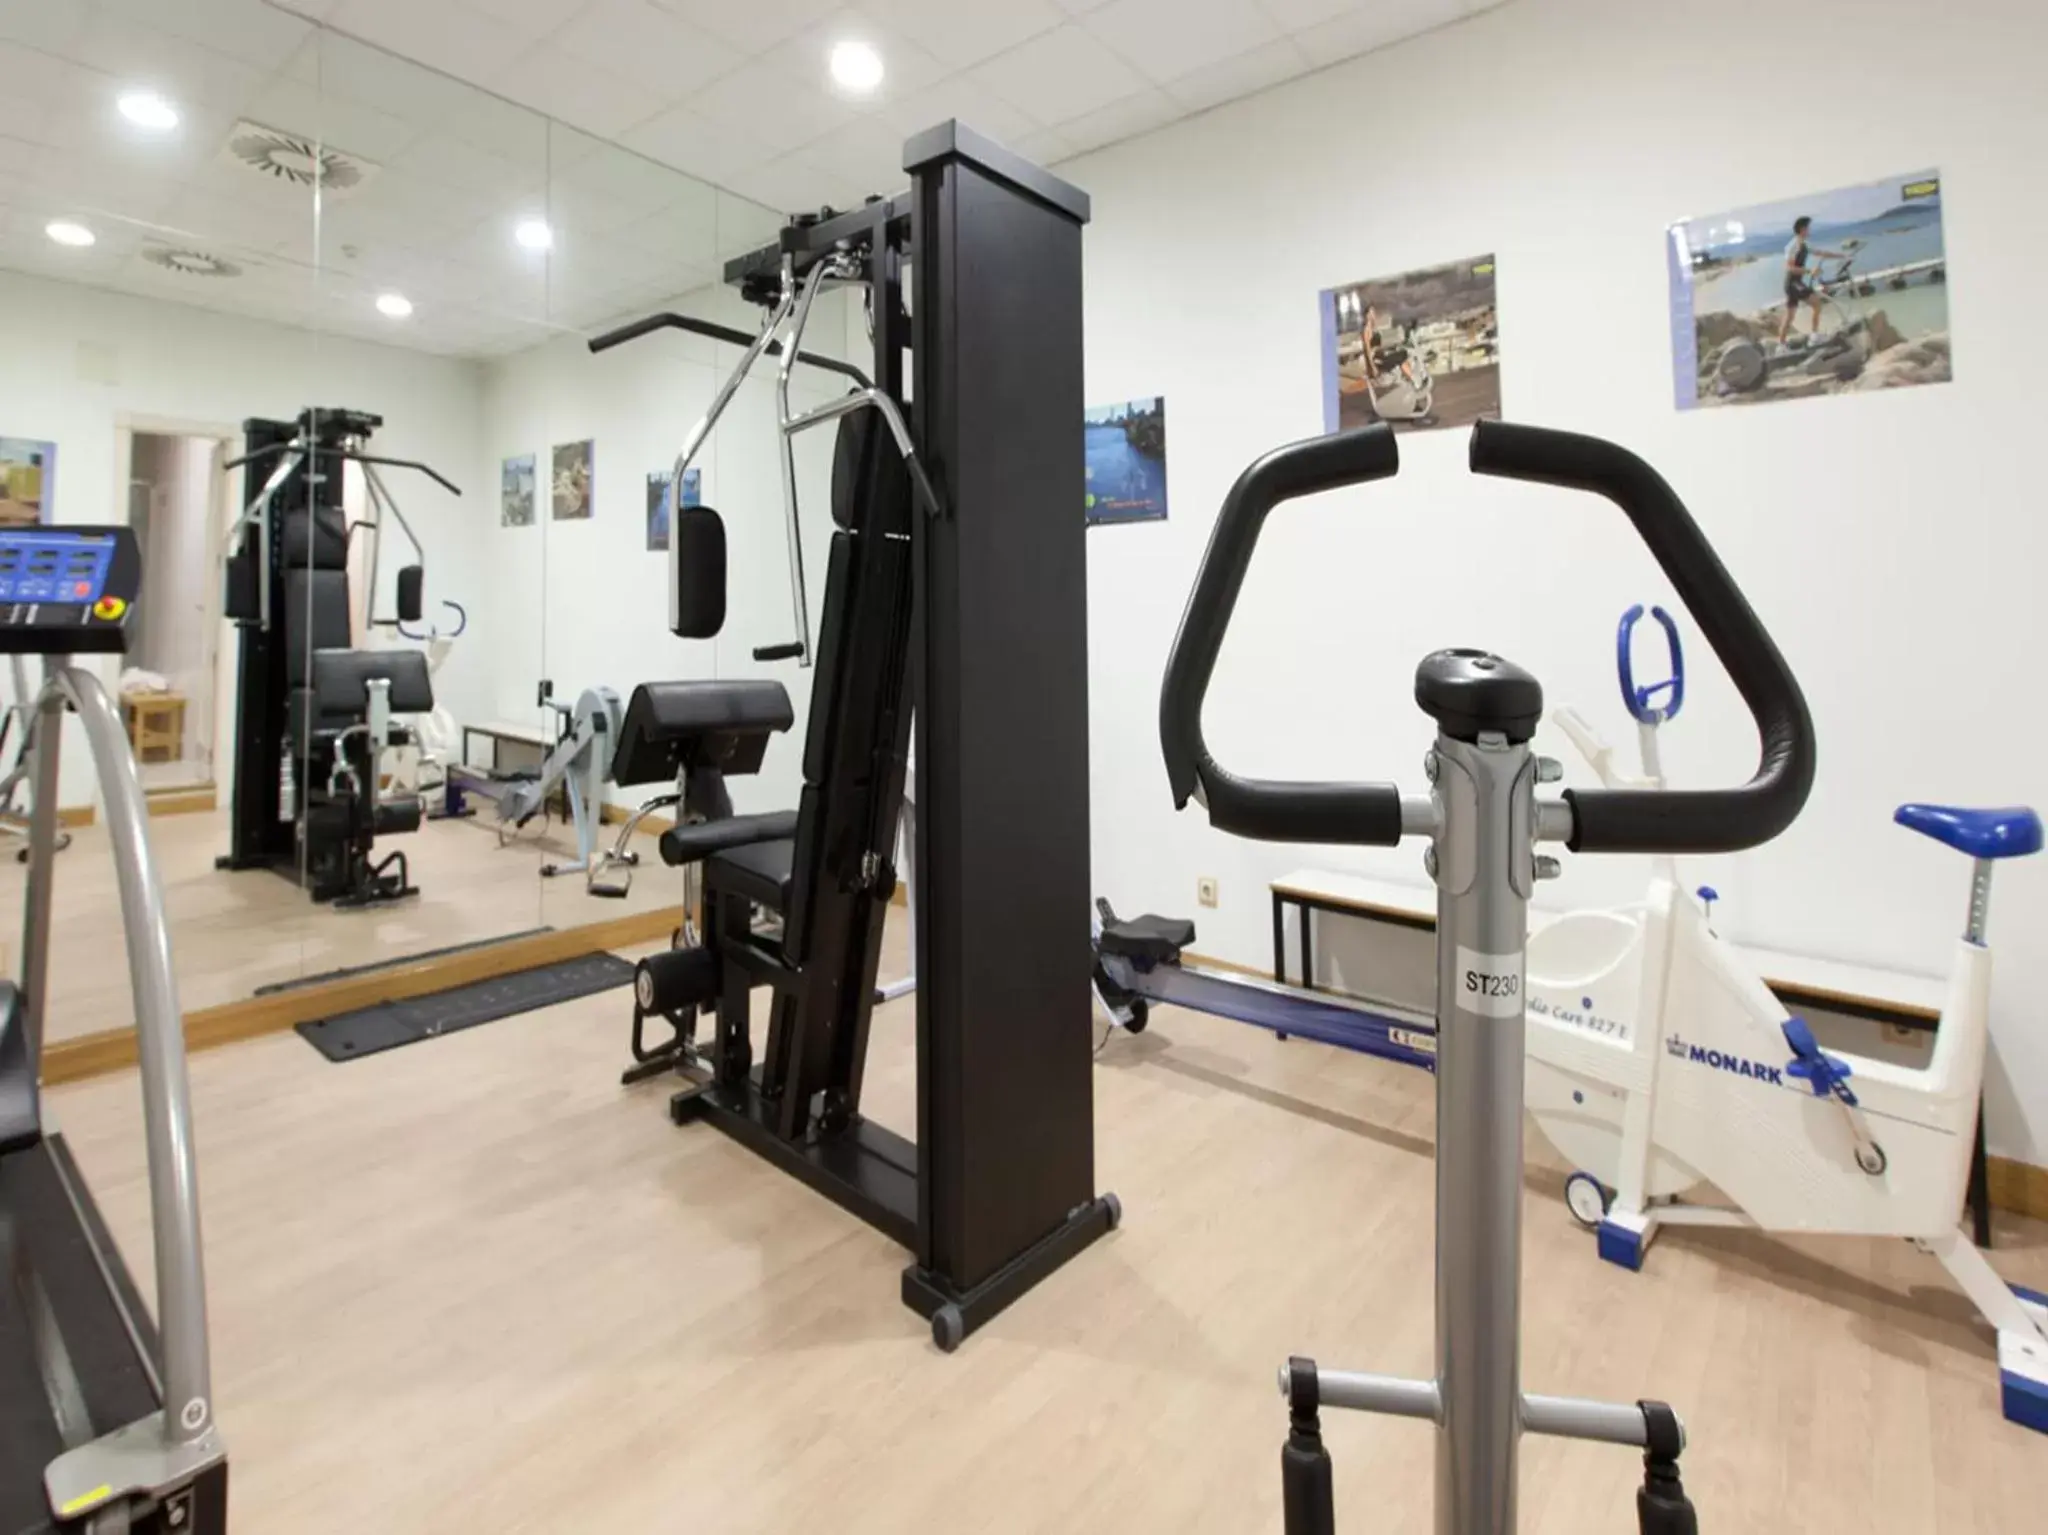 Fitness centre/facilities, Fitness Center/Facilities in Don Pio